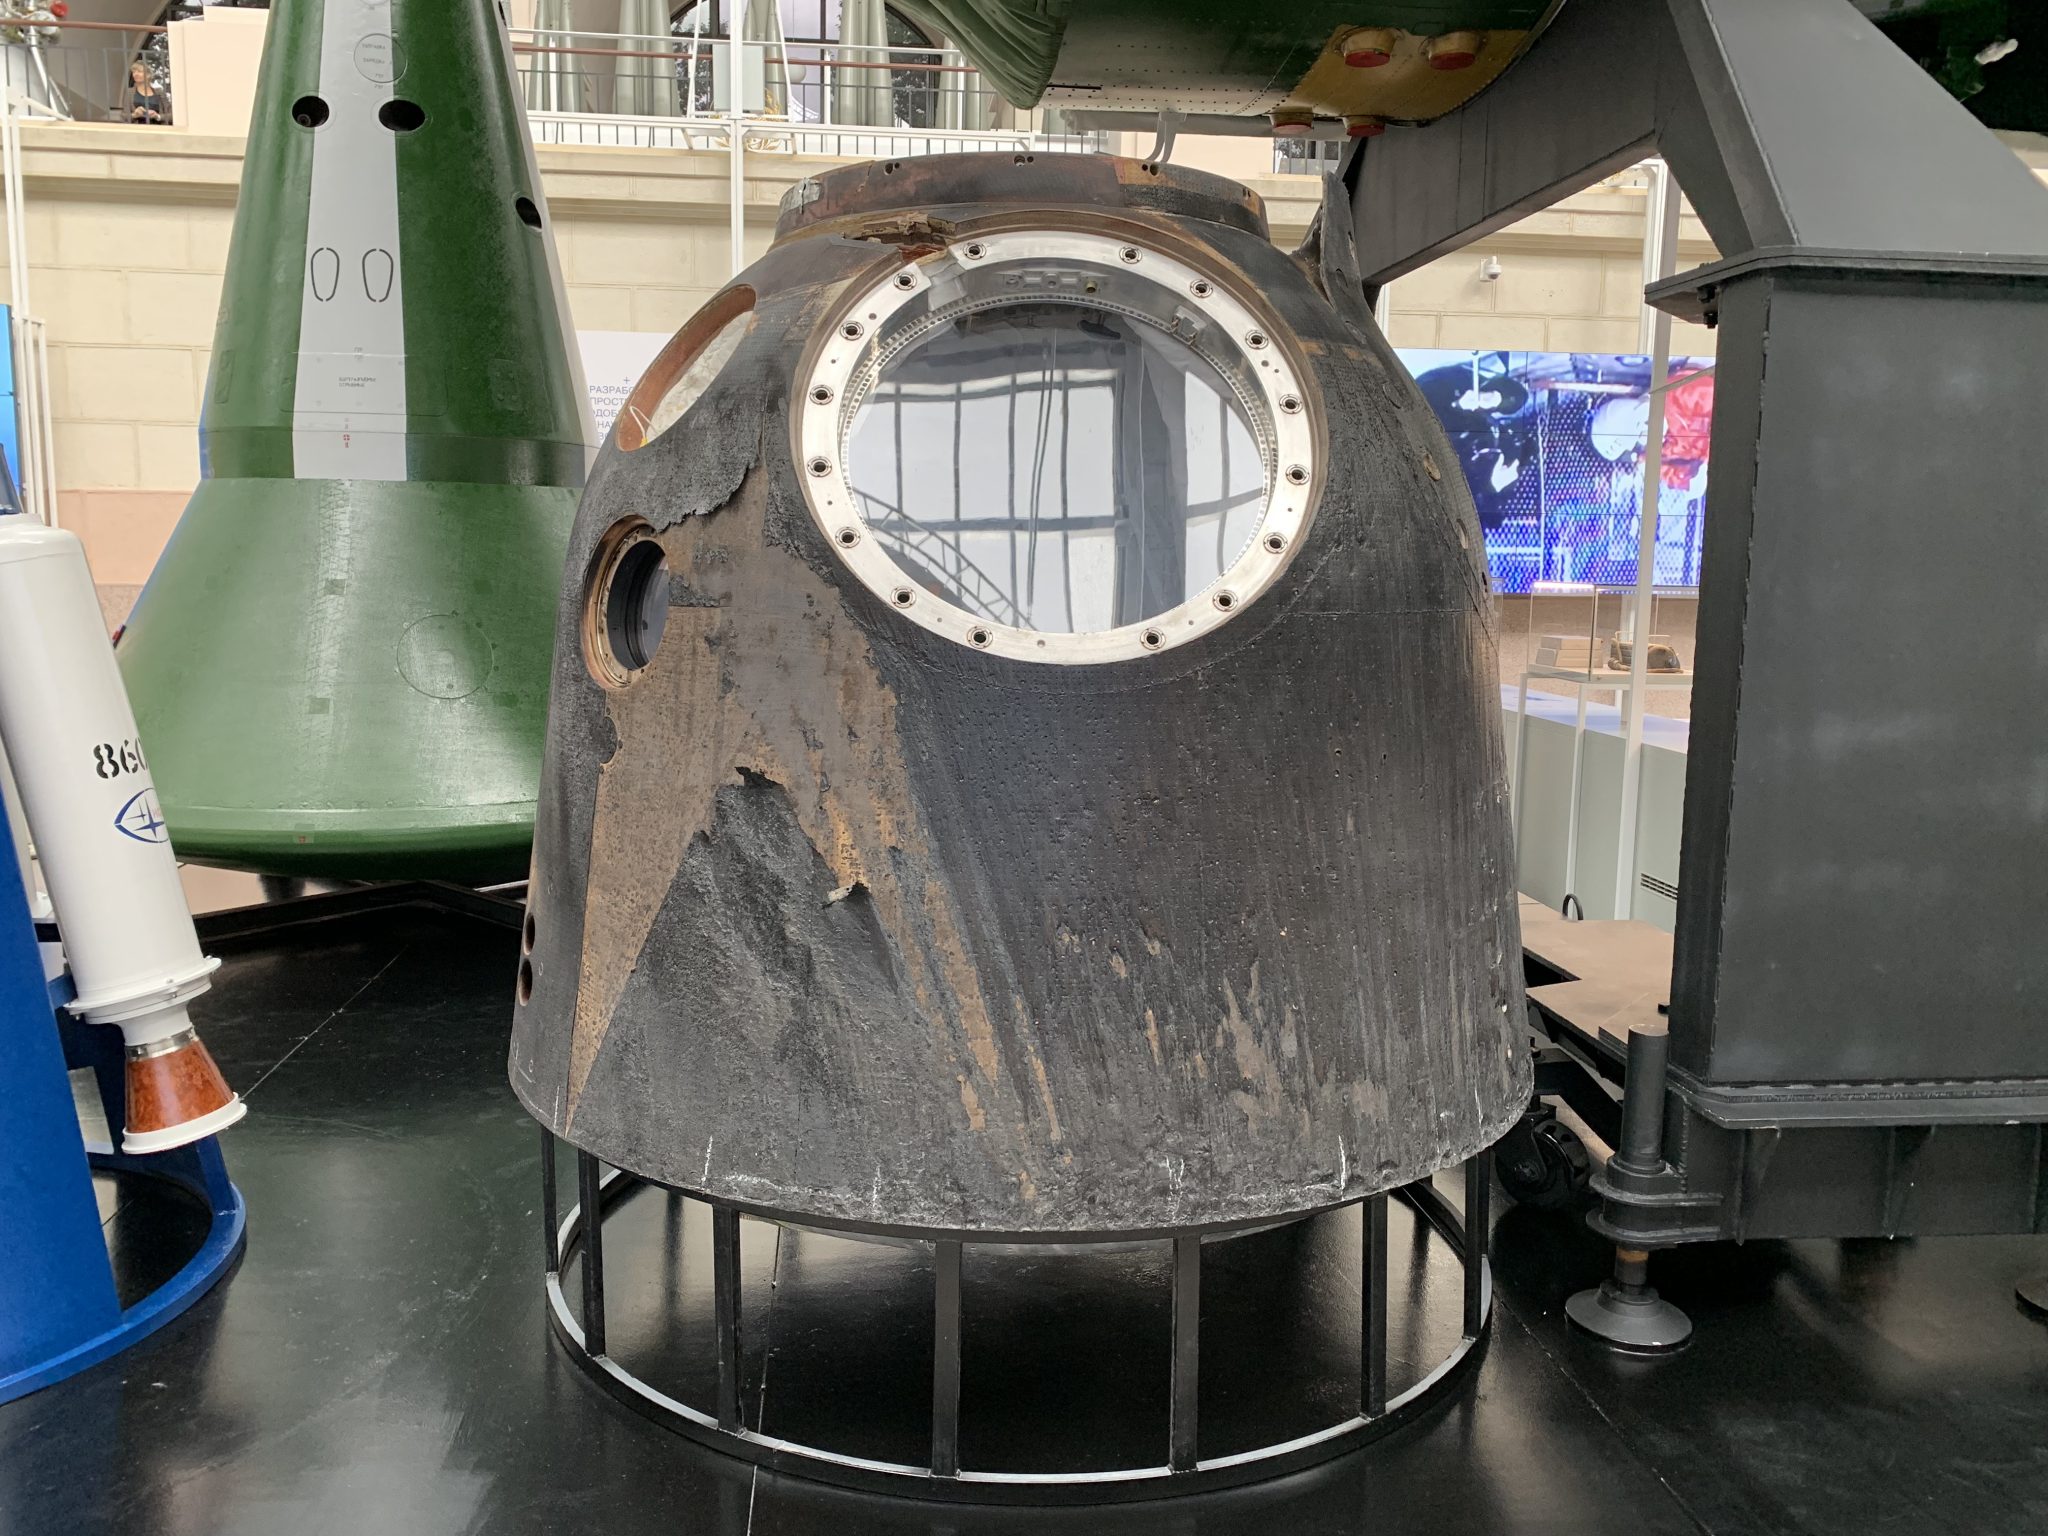 Descent vehicle of Soyuz TMA Spacecraft